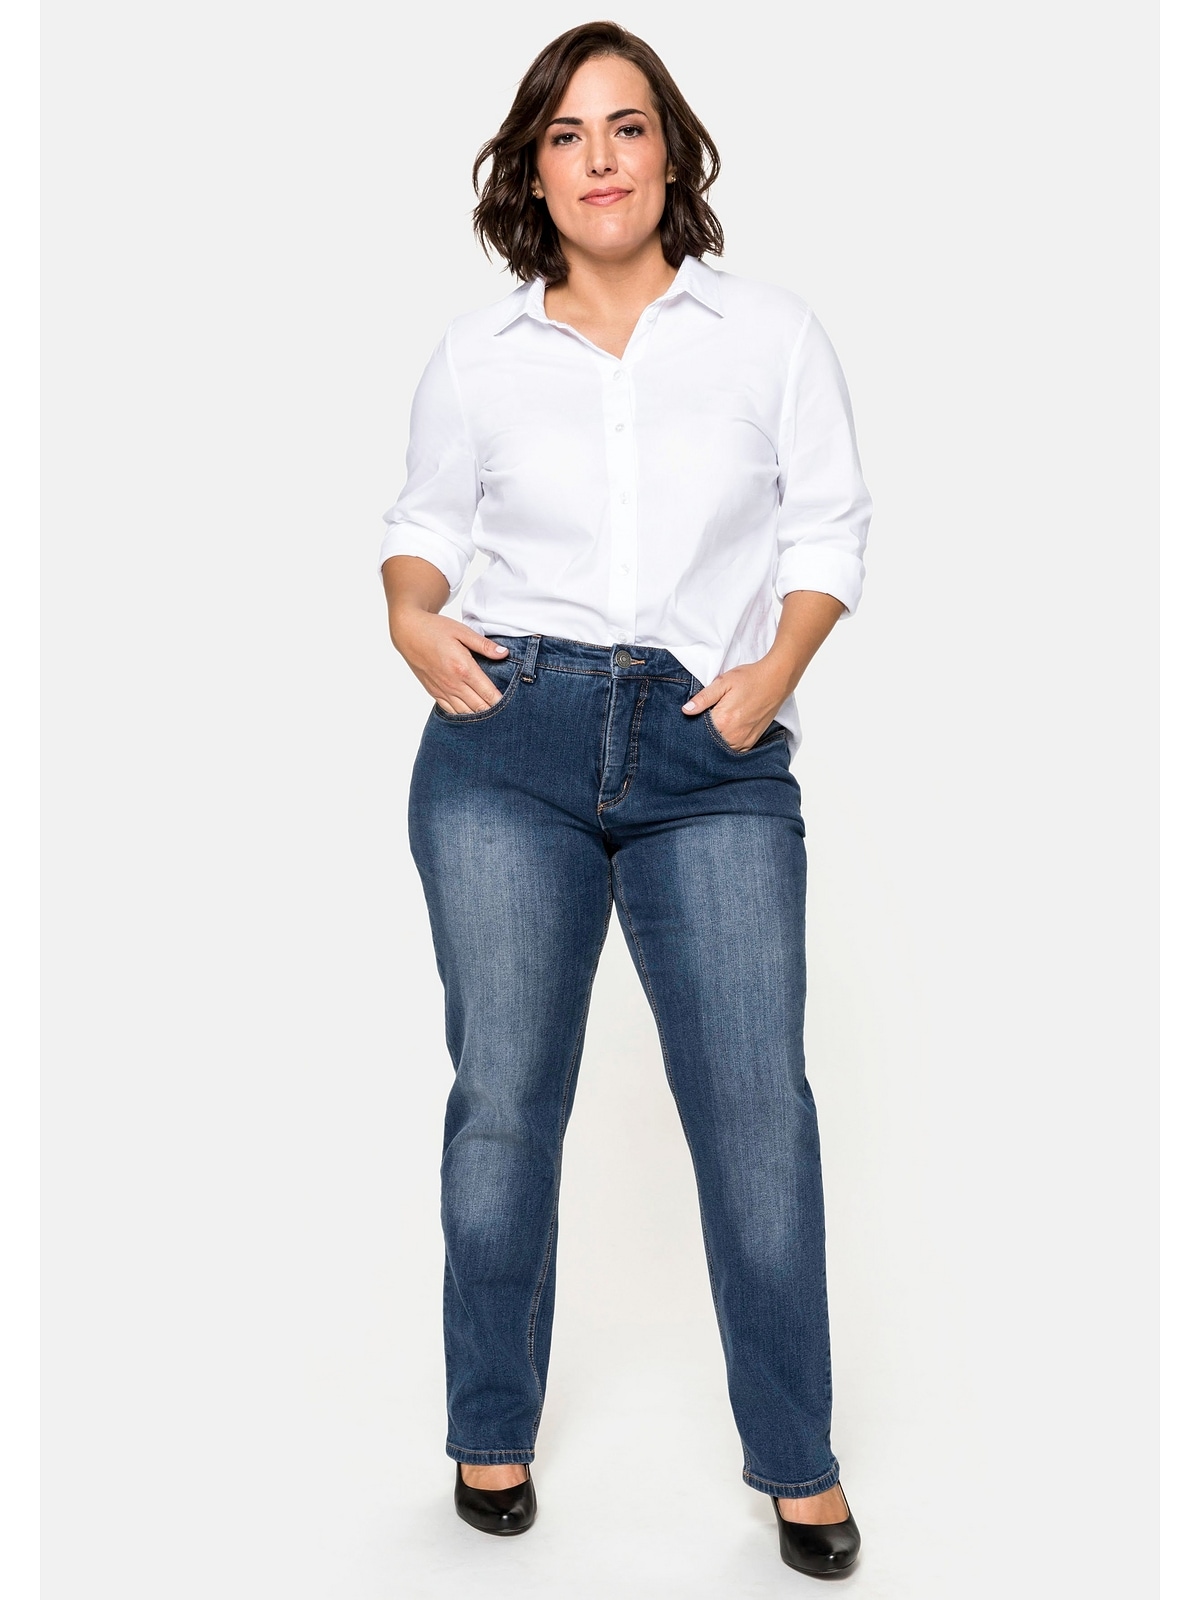 Stretch-Jeans shoppen Größen«, Bauch-weg-Effekt »Große Sheego